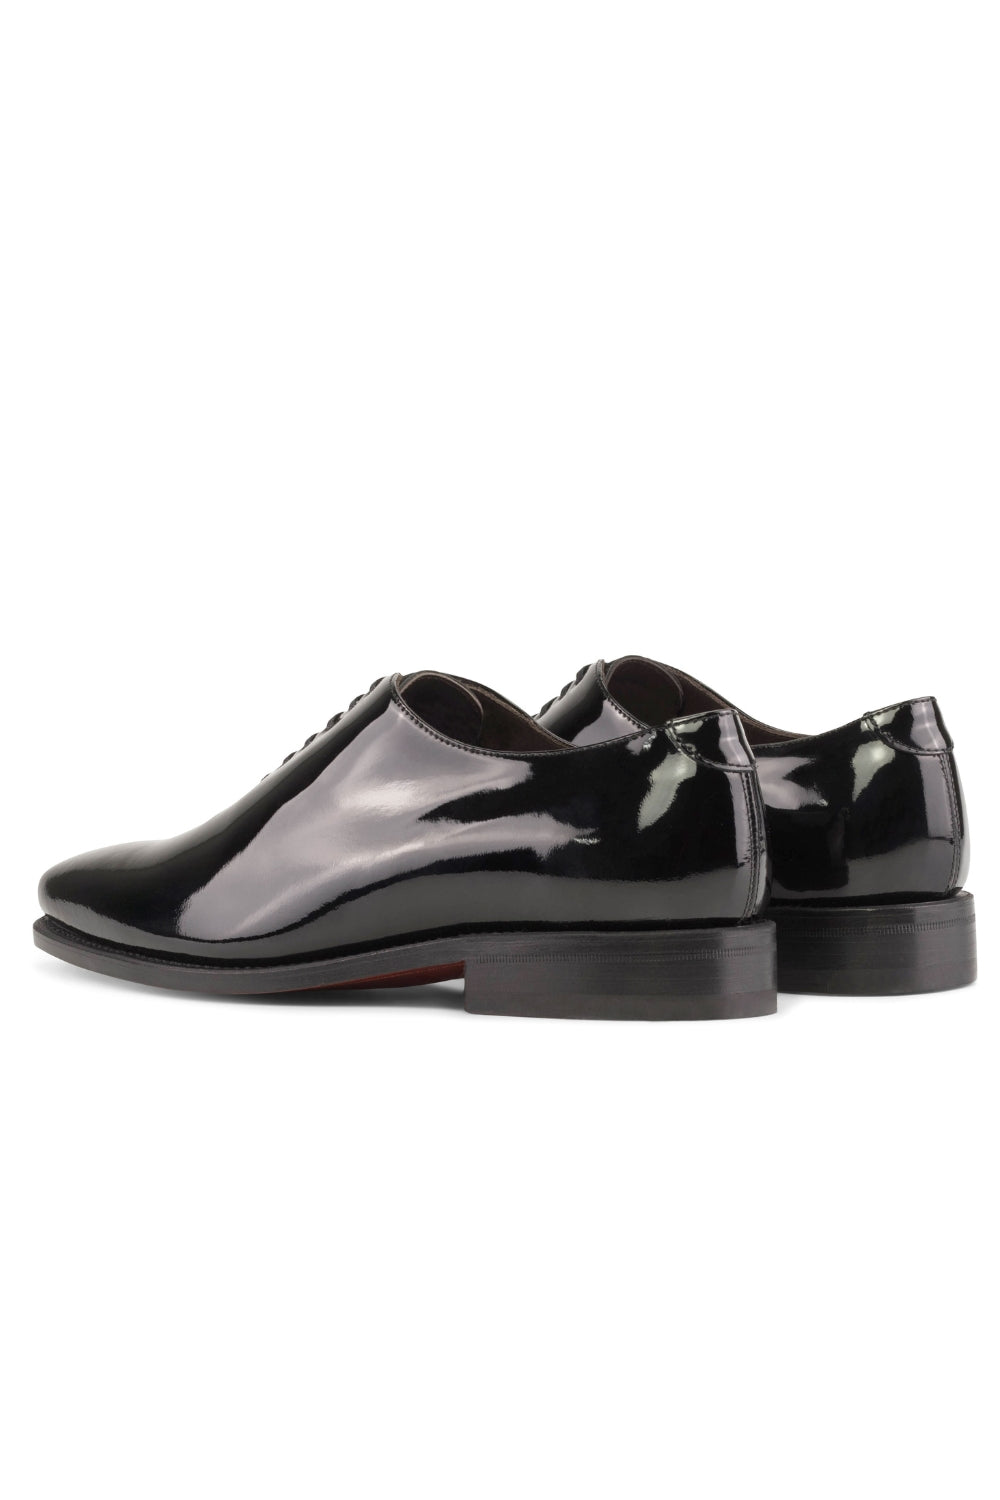 Shiny Black Wholecut Oxford Shoes – Stratos